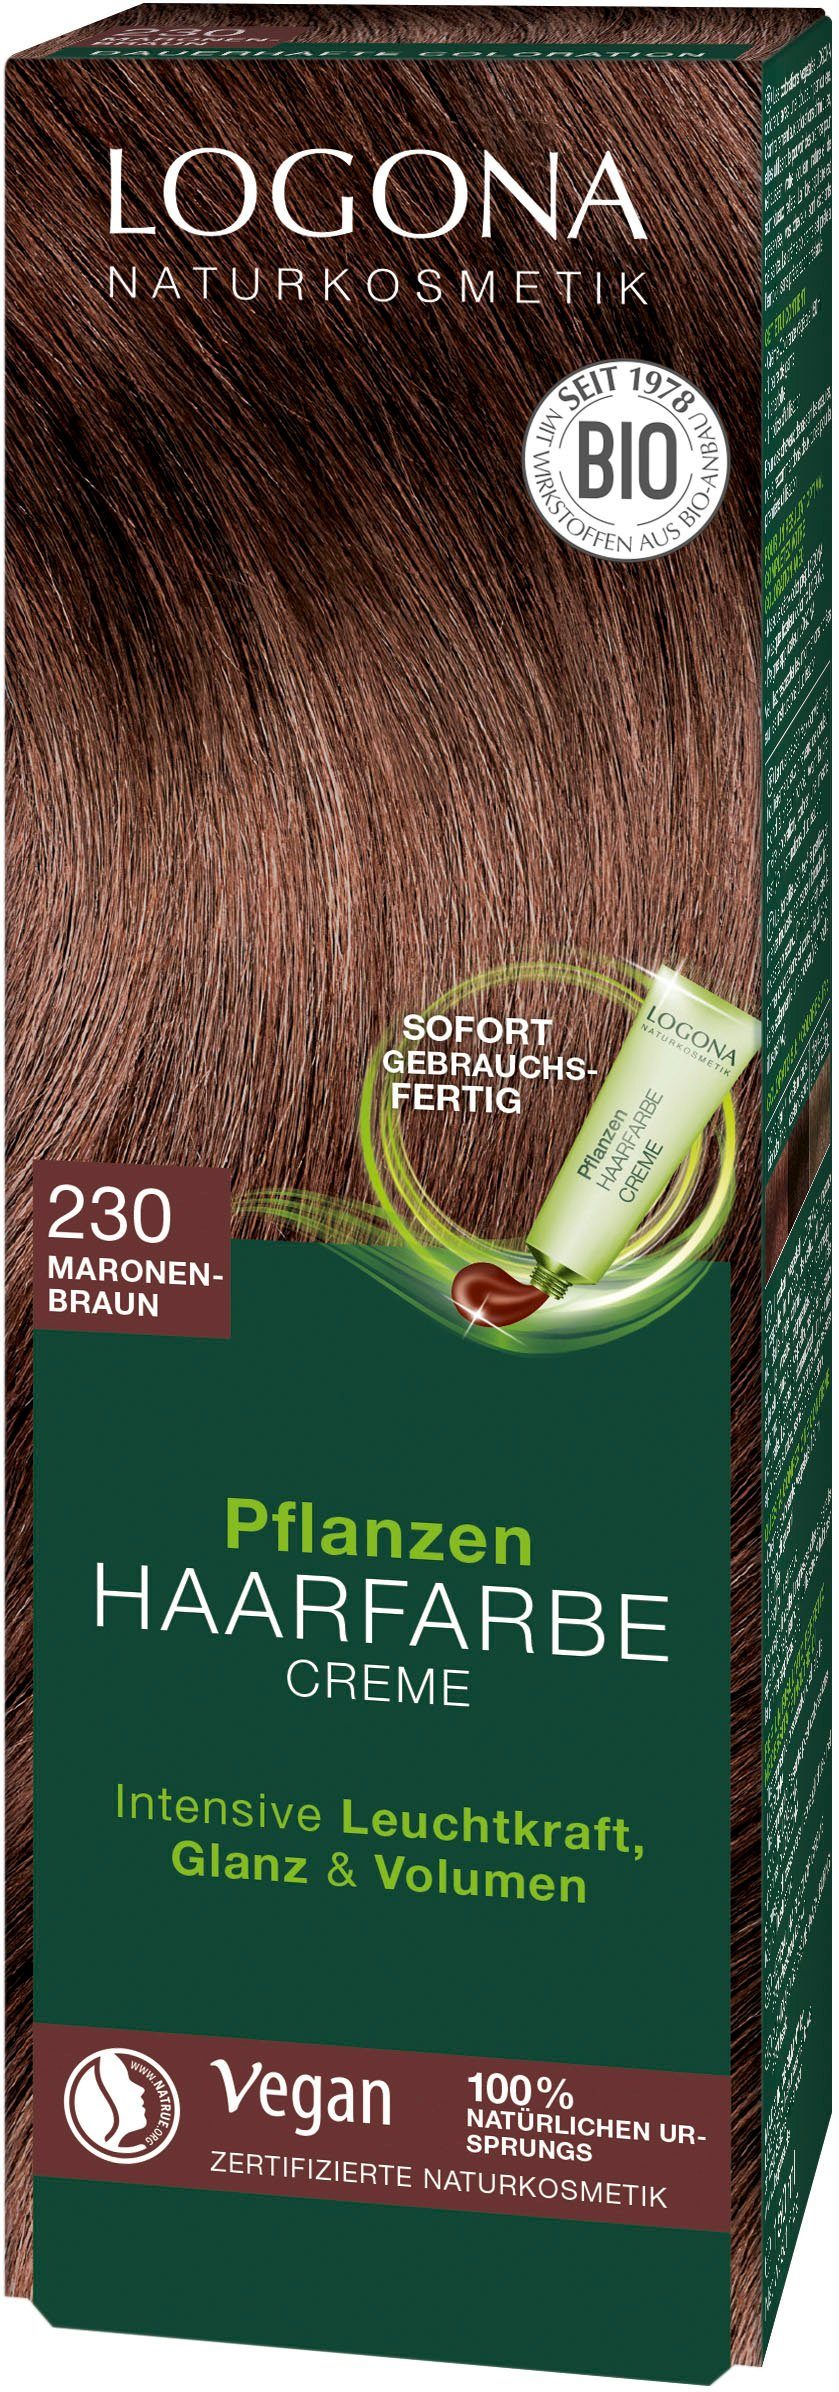 LOGONA Haarfarbe Logona maronenbraun Pflanzen-Haarfarbe Creme 230